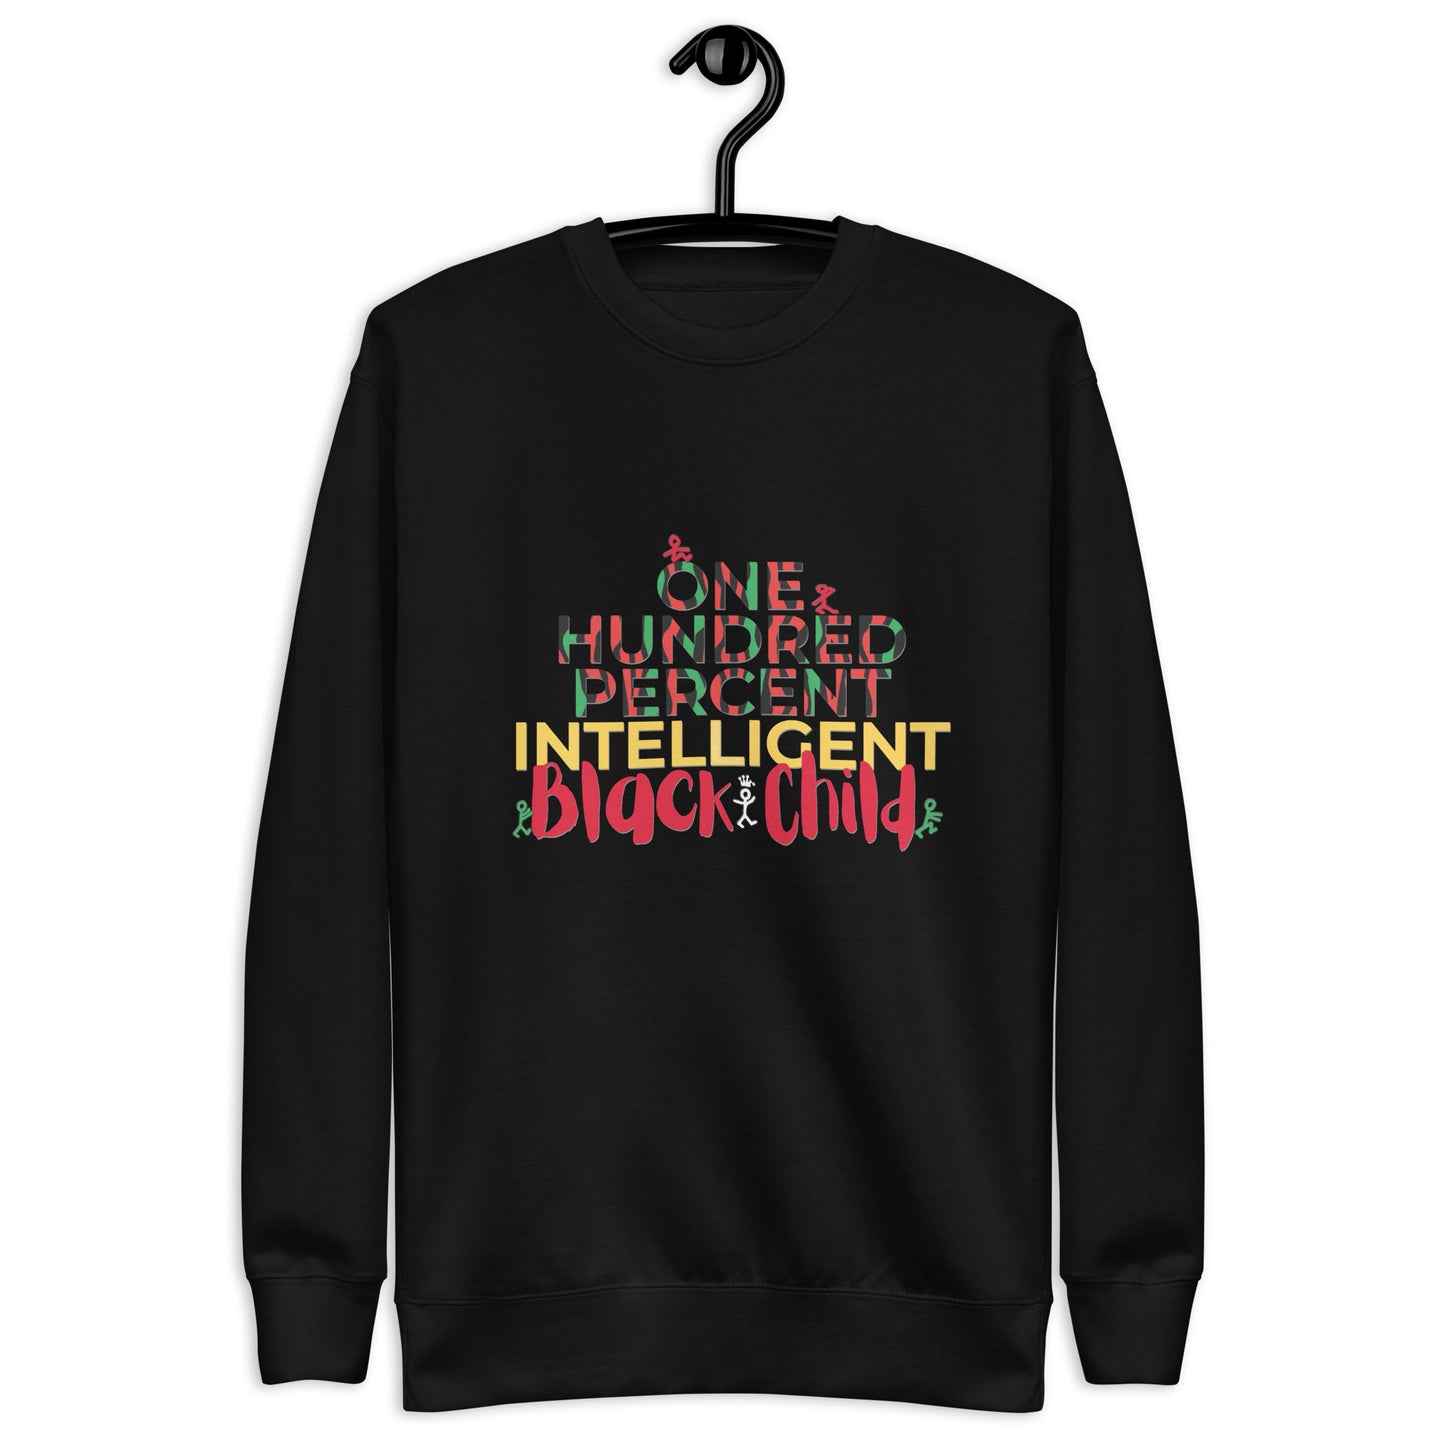 One Hundred Percent Intelligent Black Child Unisex Sweatshirt